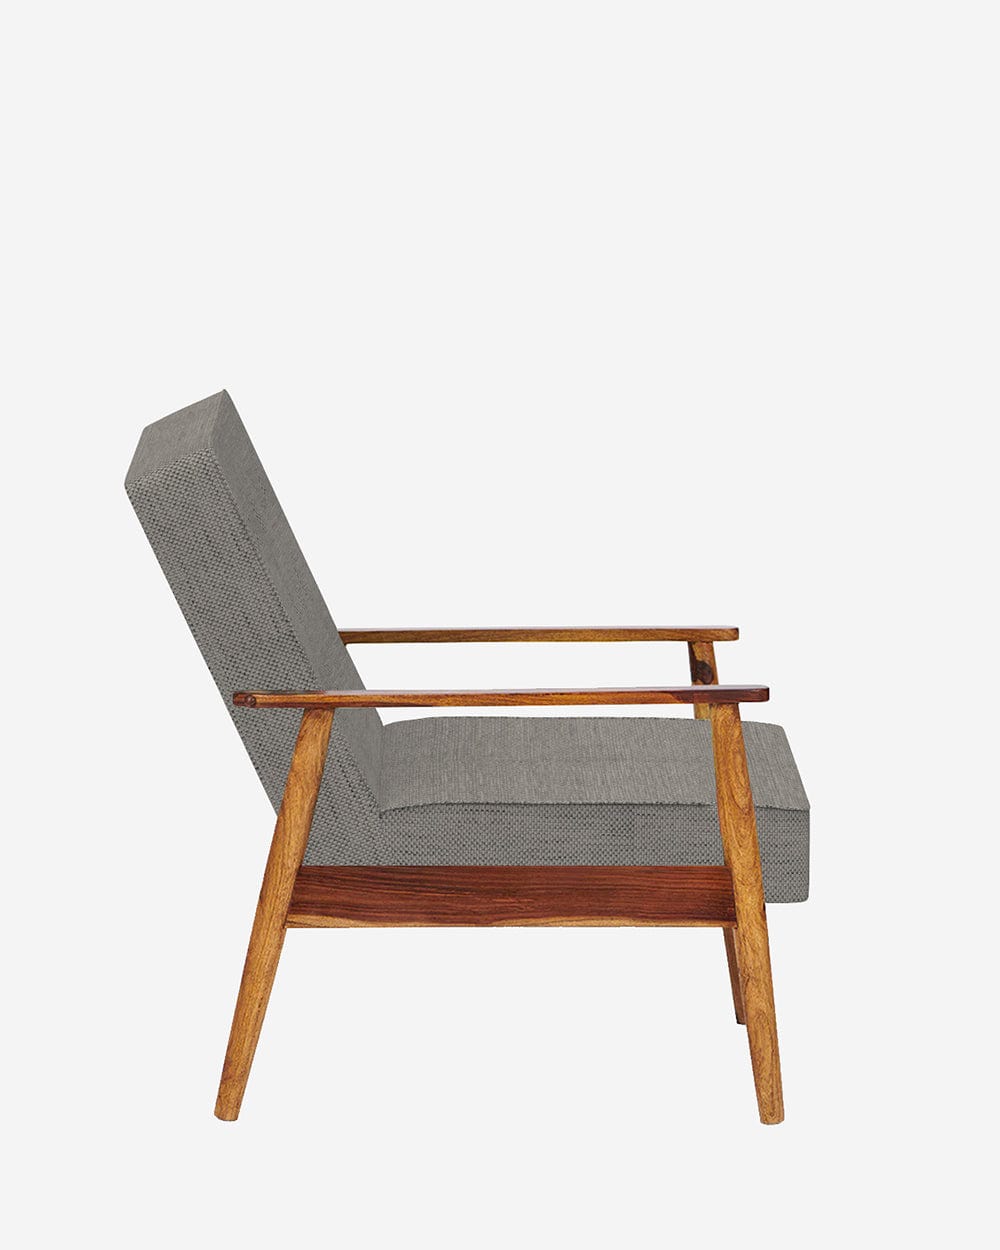 Chumbak Memsaab Arm Chair - Bangalore Grey